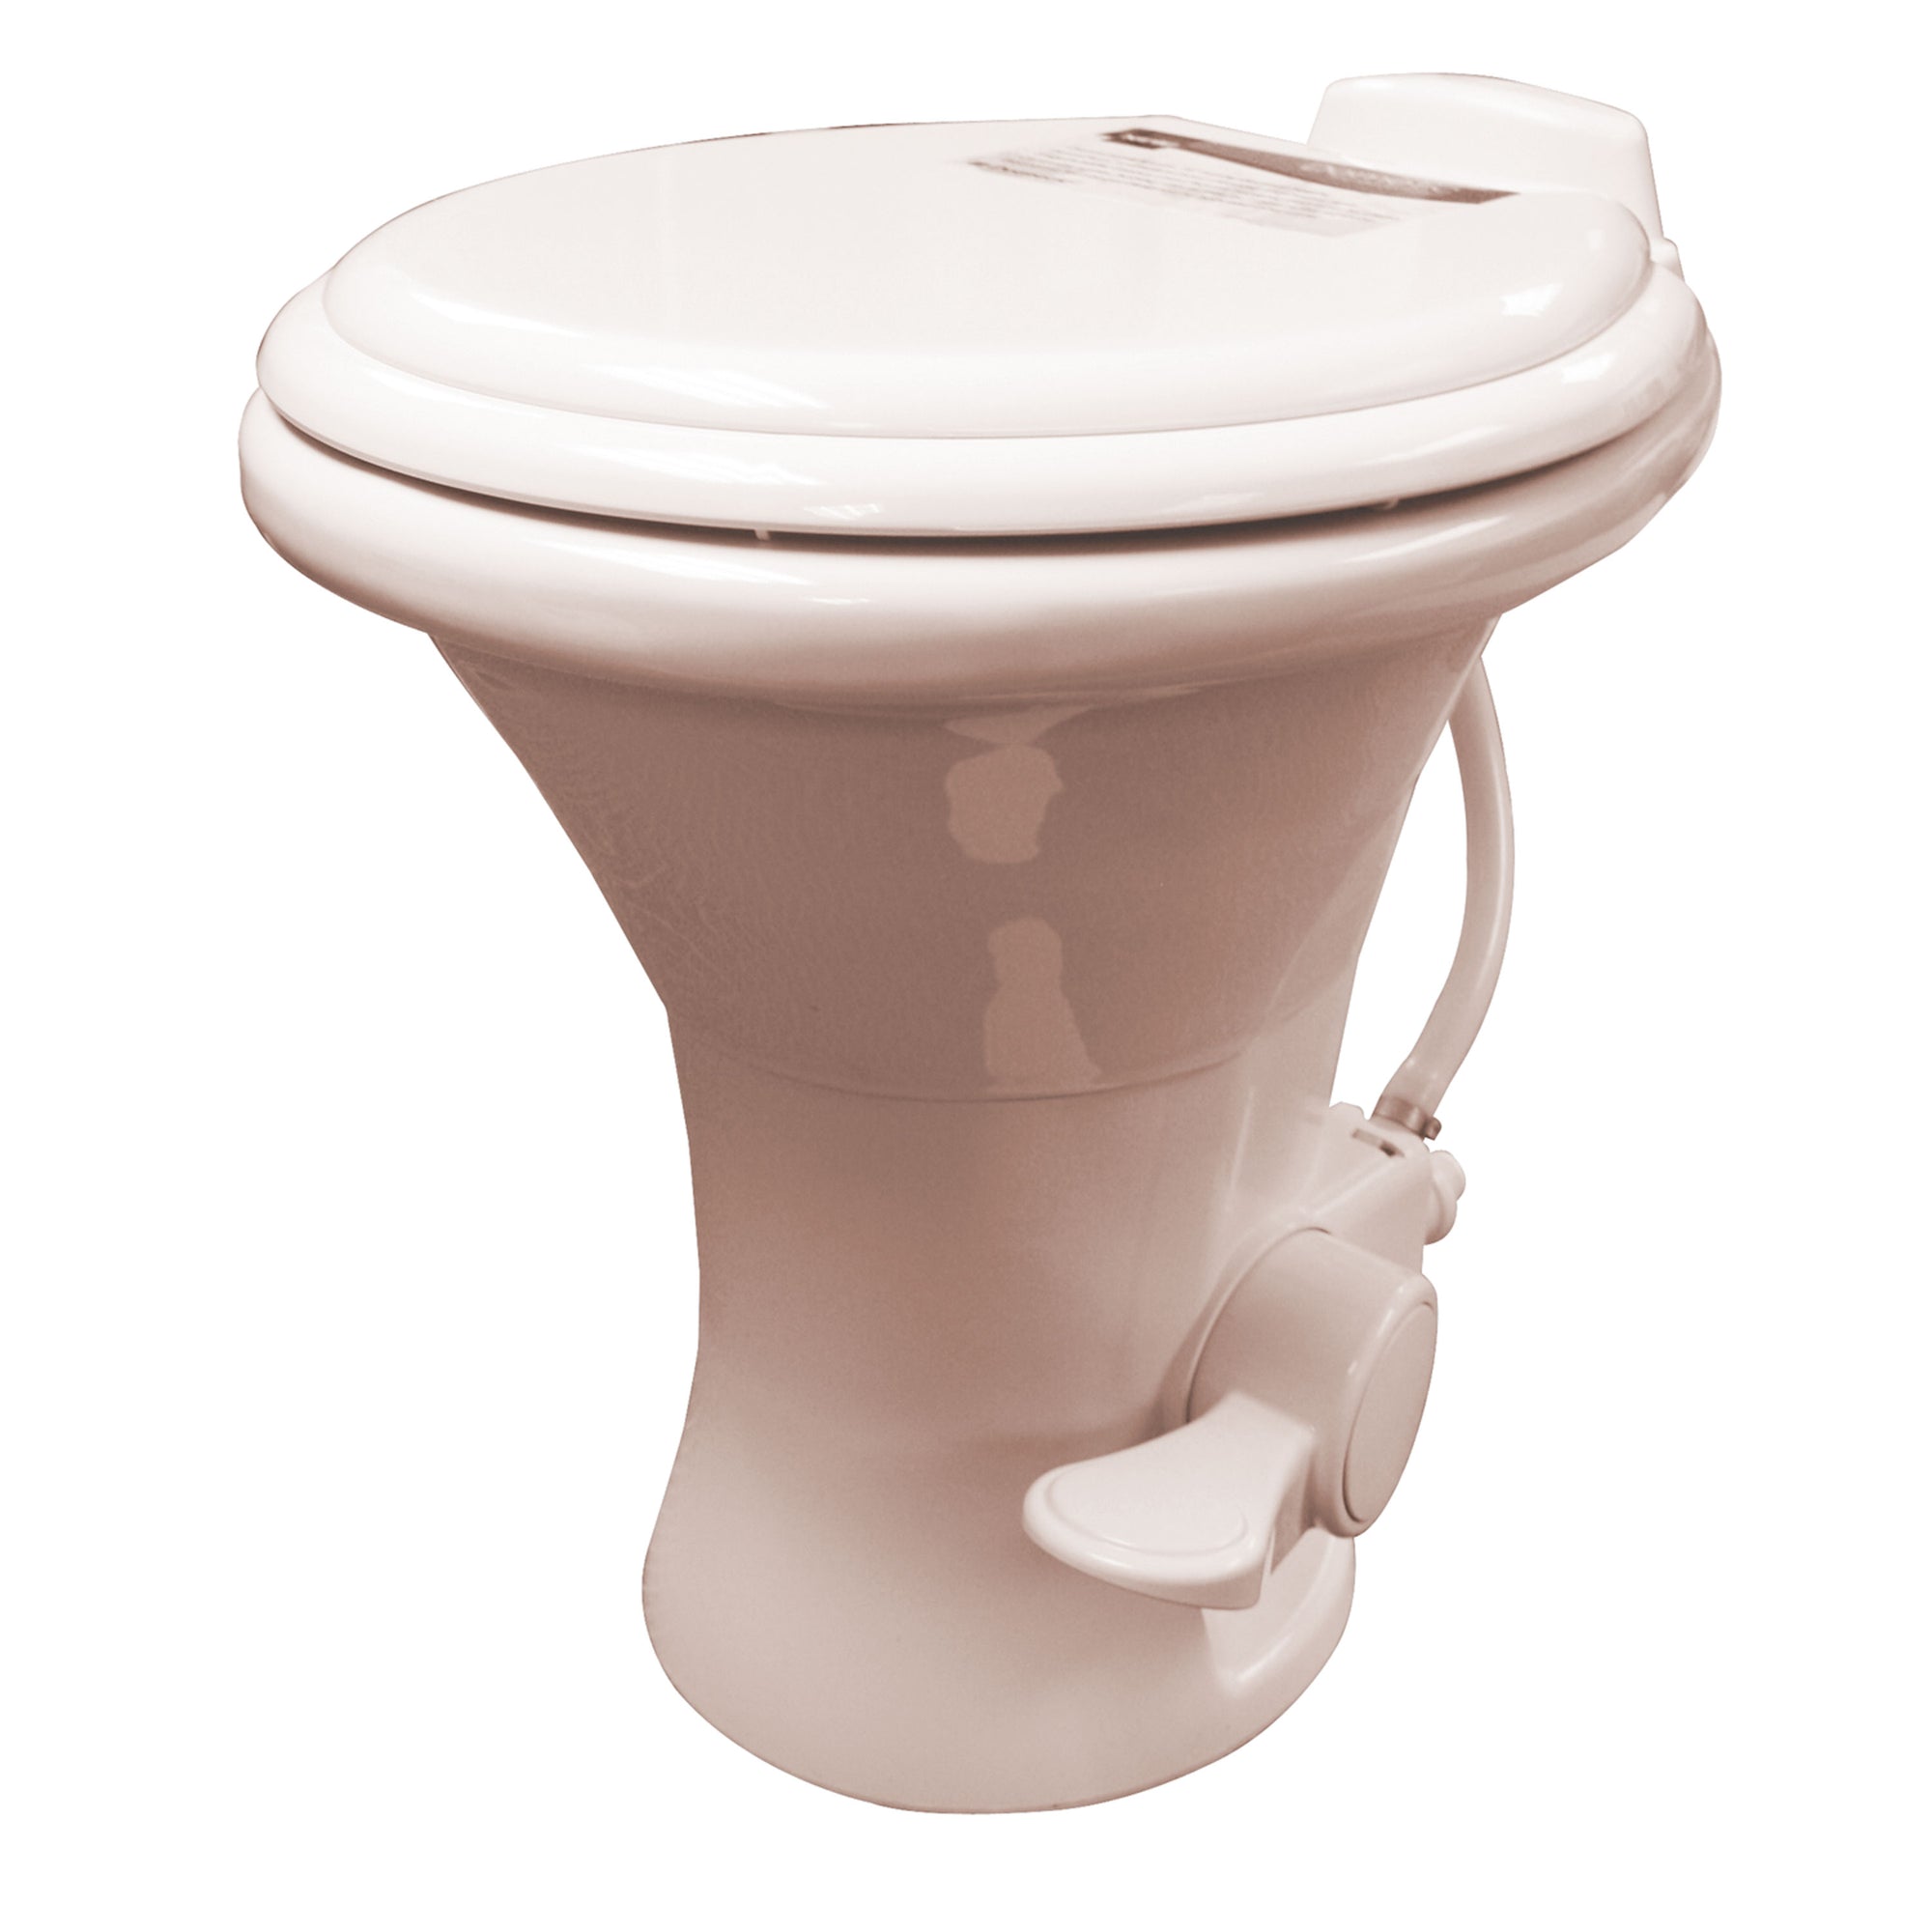 Dometic 302310081 310 Series Gravity-Flush Toilet - White, Standard